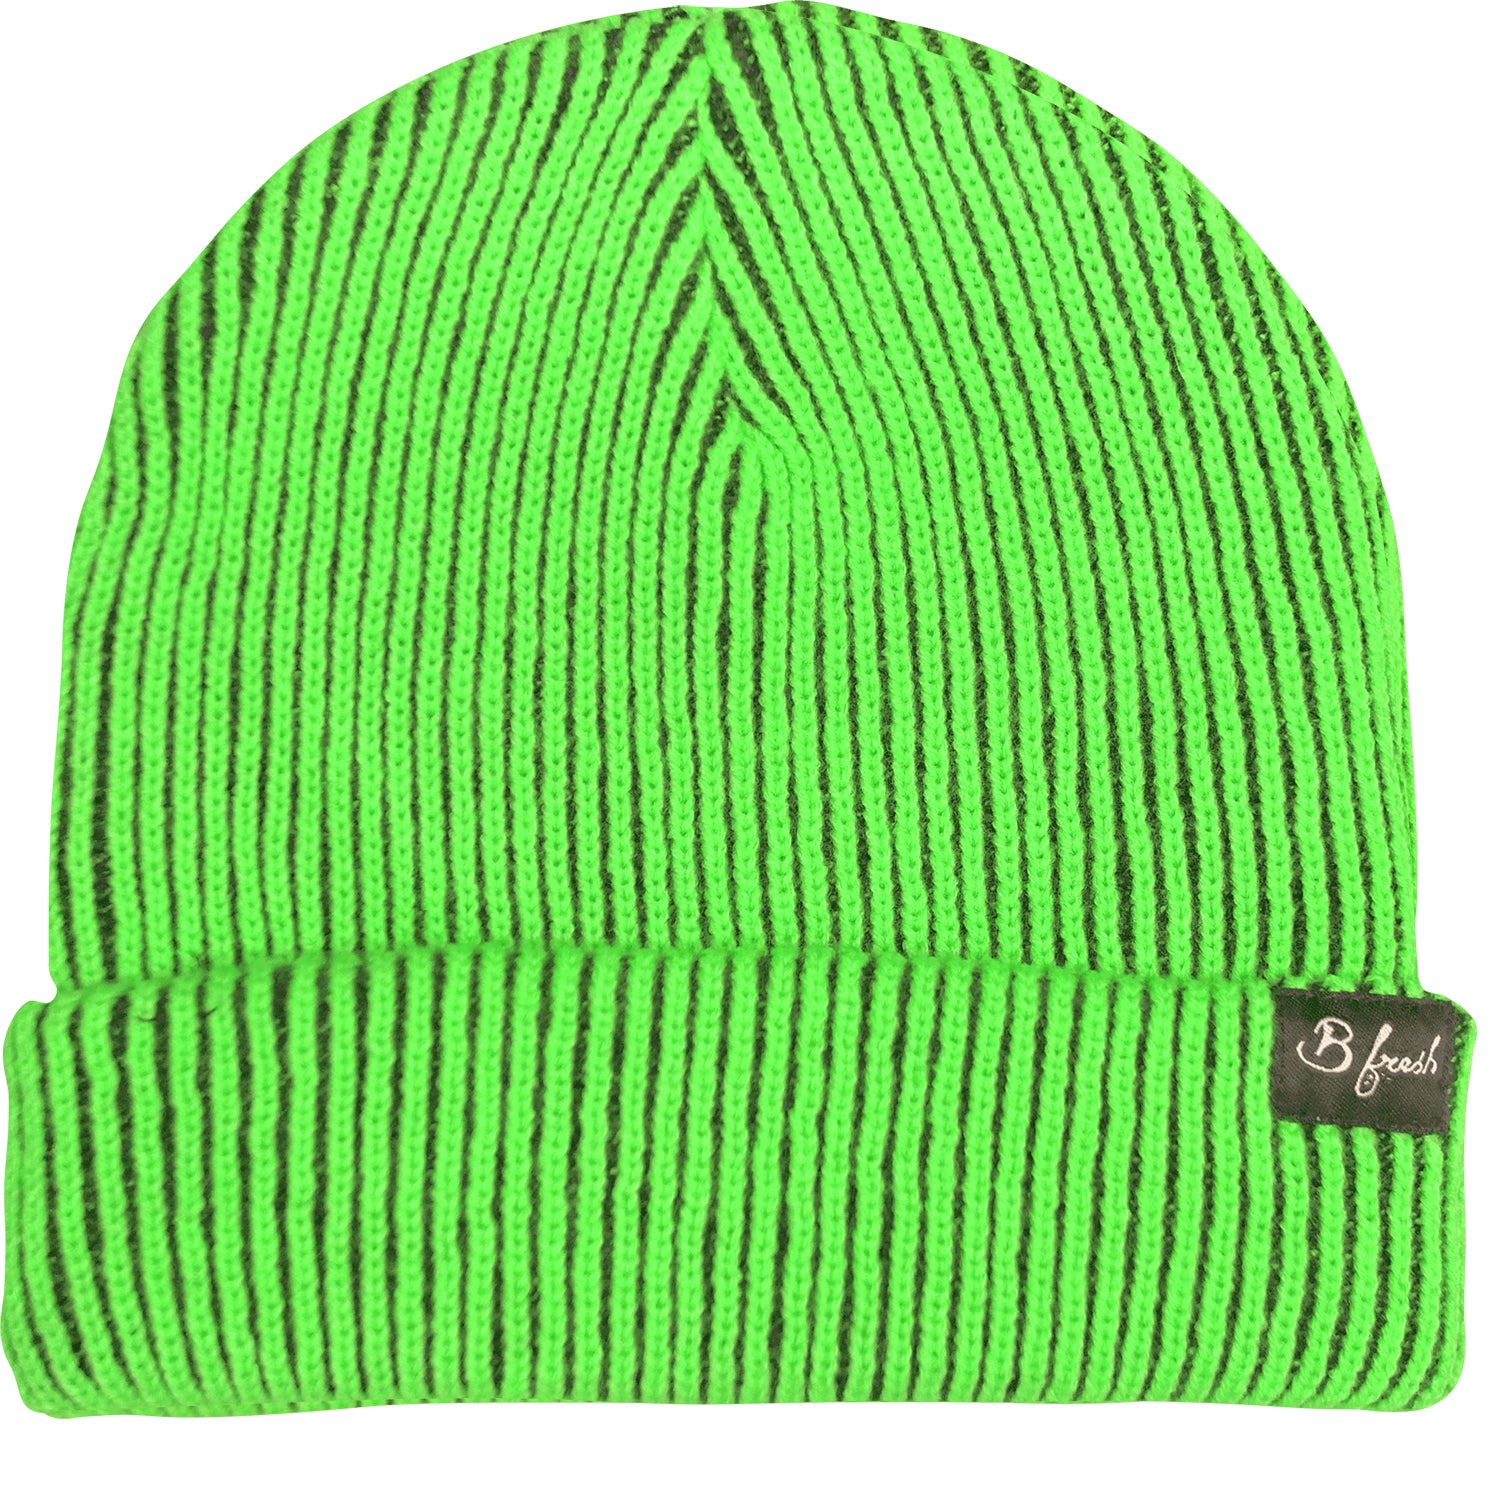 The Mickey Retro Green Beanie Ski Stocking Cap Winter Hat. B Fresh Gear.